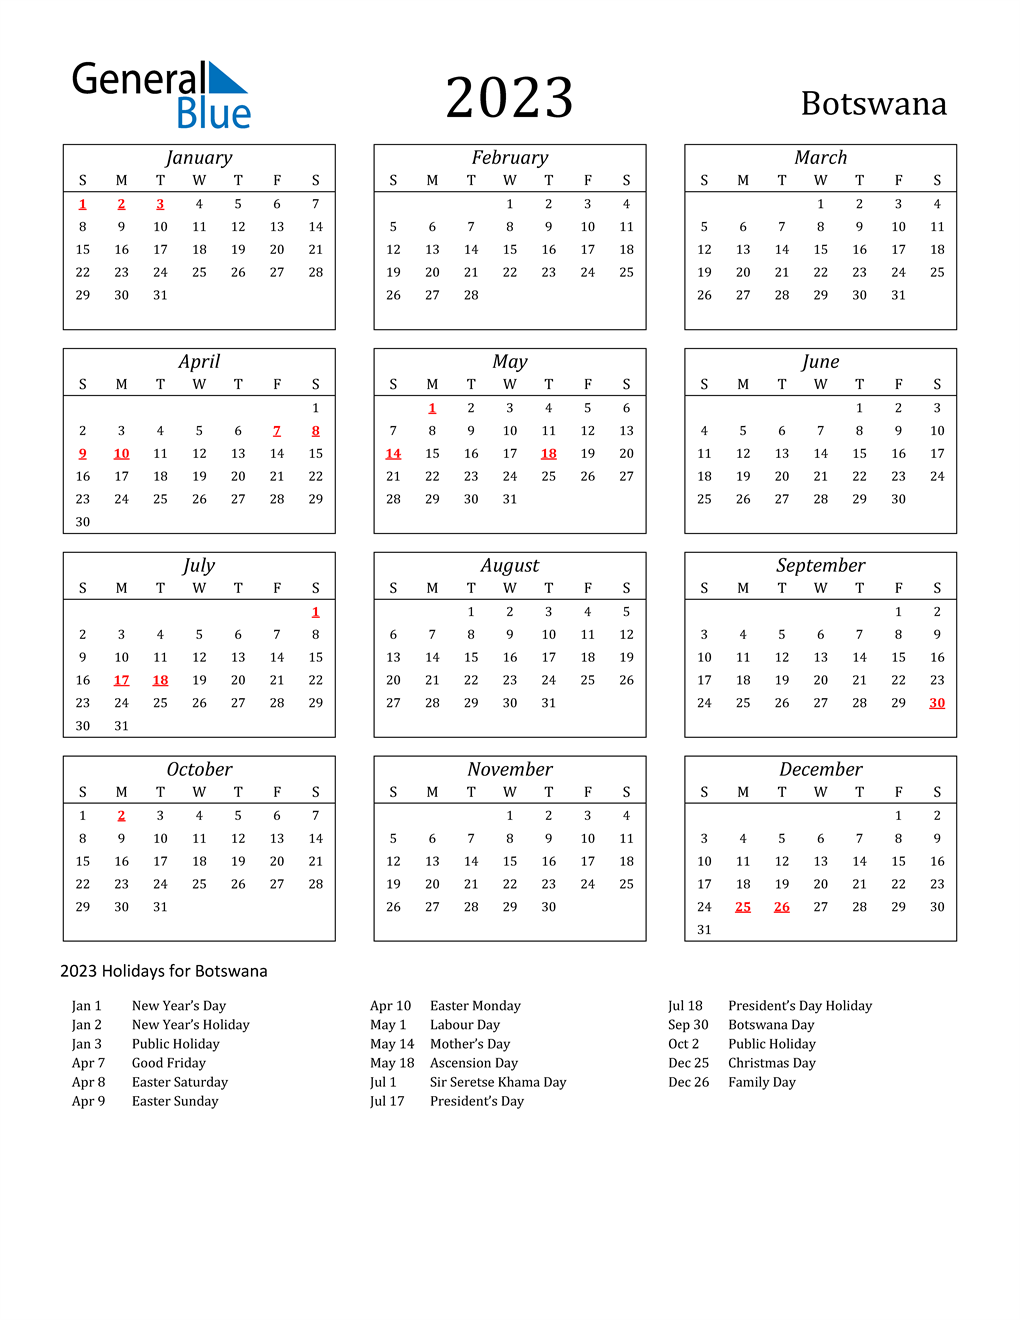 Sa Public Holidays 2023 Calendar Calendar 2023 With Federal Holidays